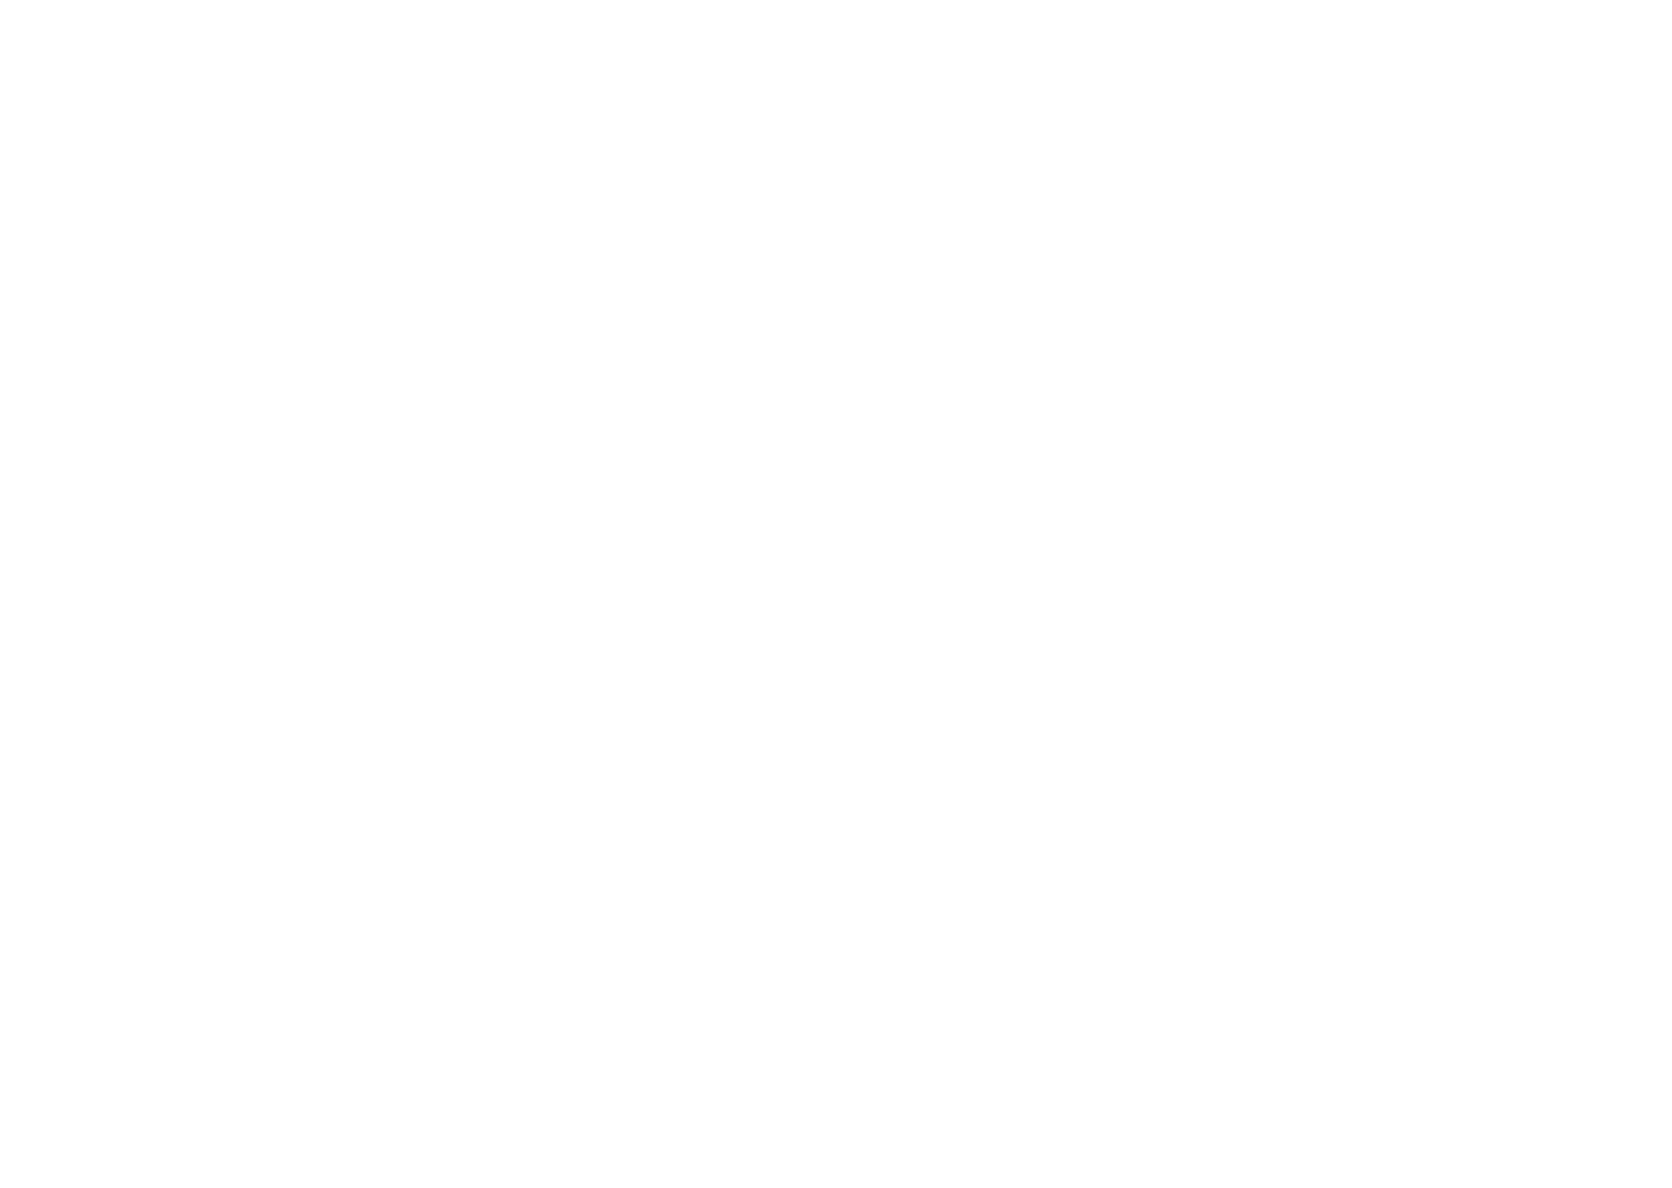 Sun Oaks Homeowners Association - A gated community in Medford, Oregon